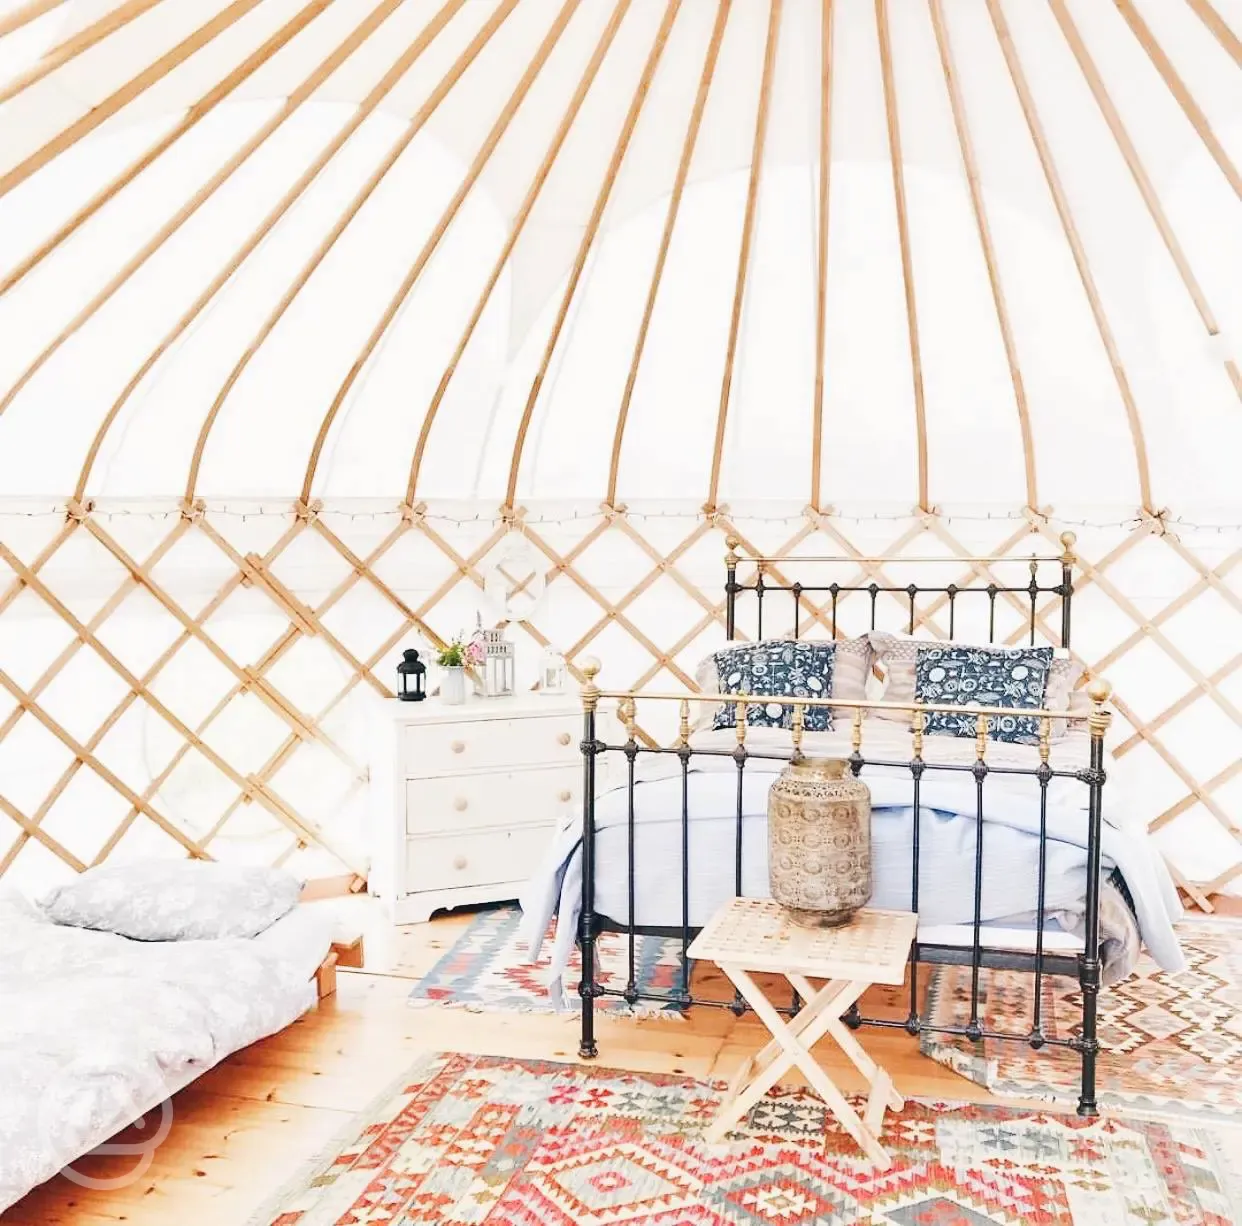 Furnished yurt holiday